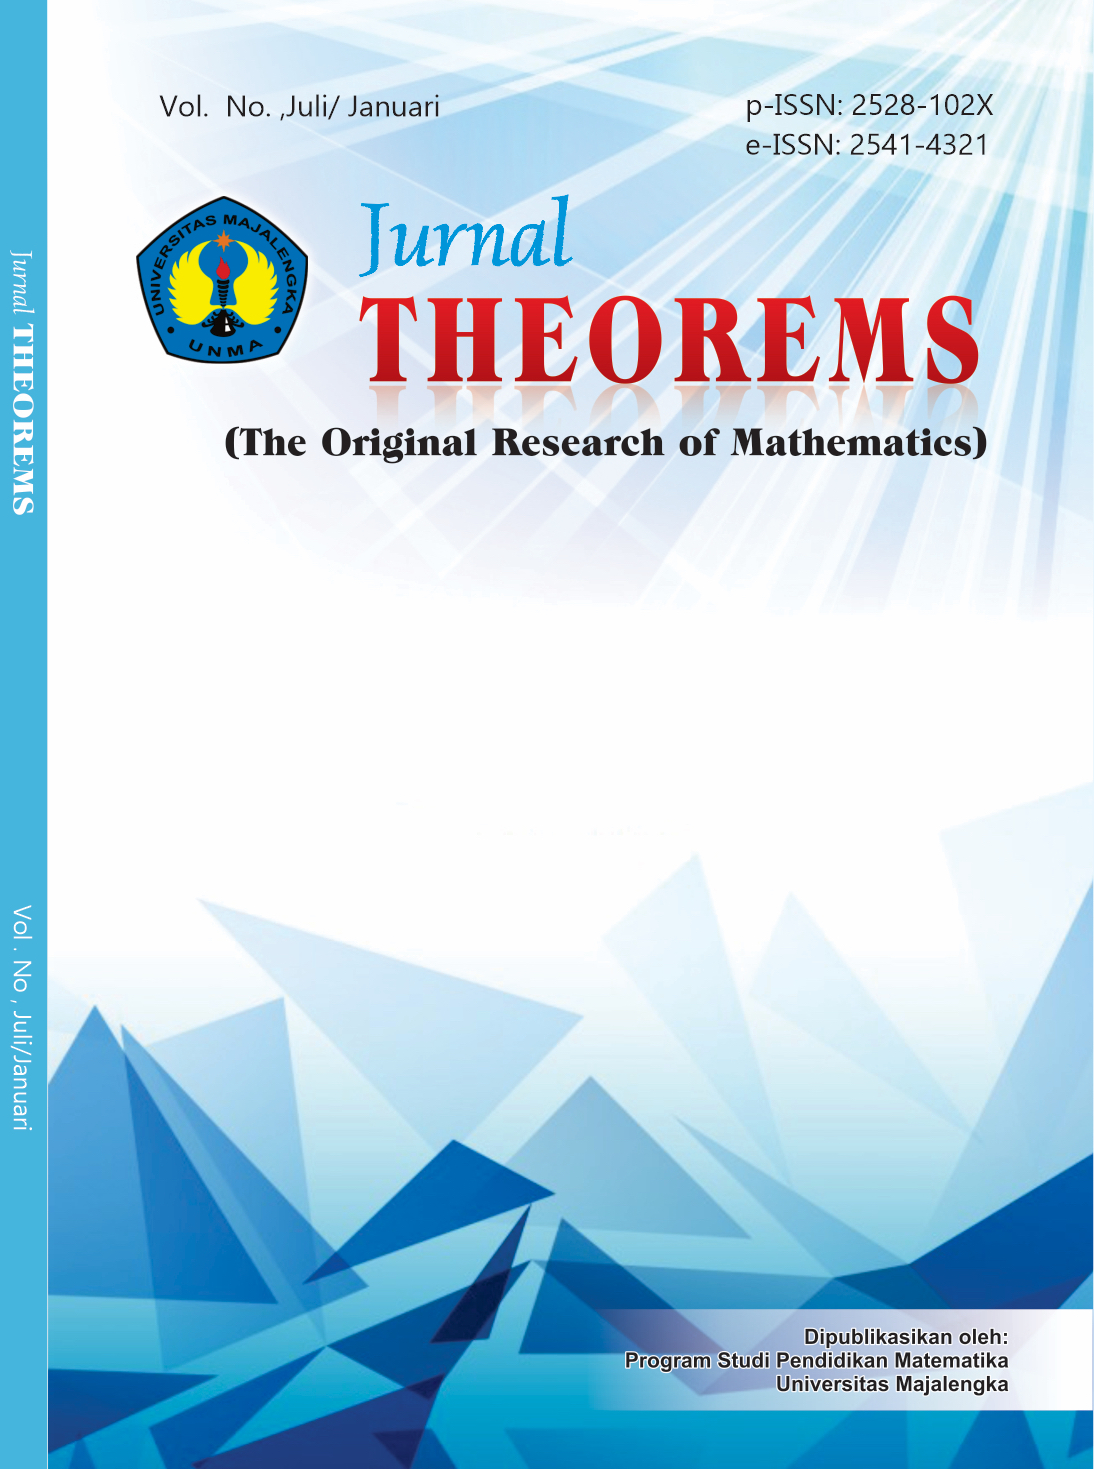 Jurnal Theorems